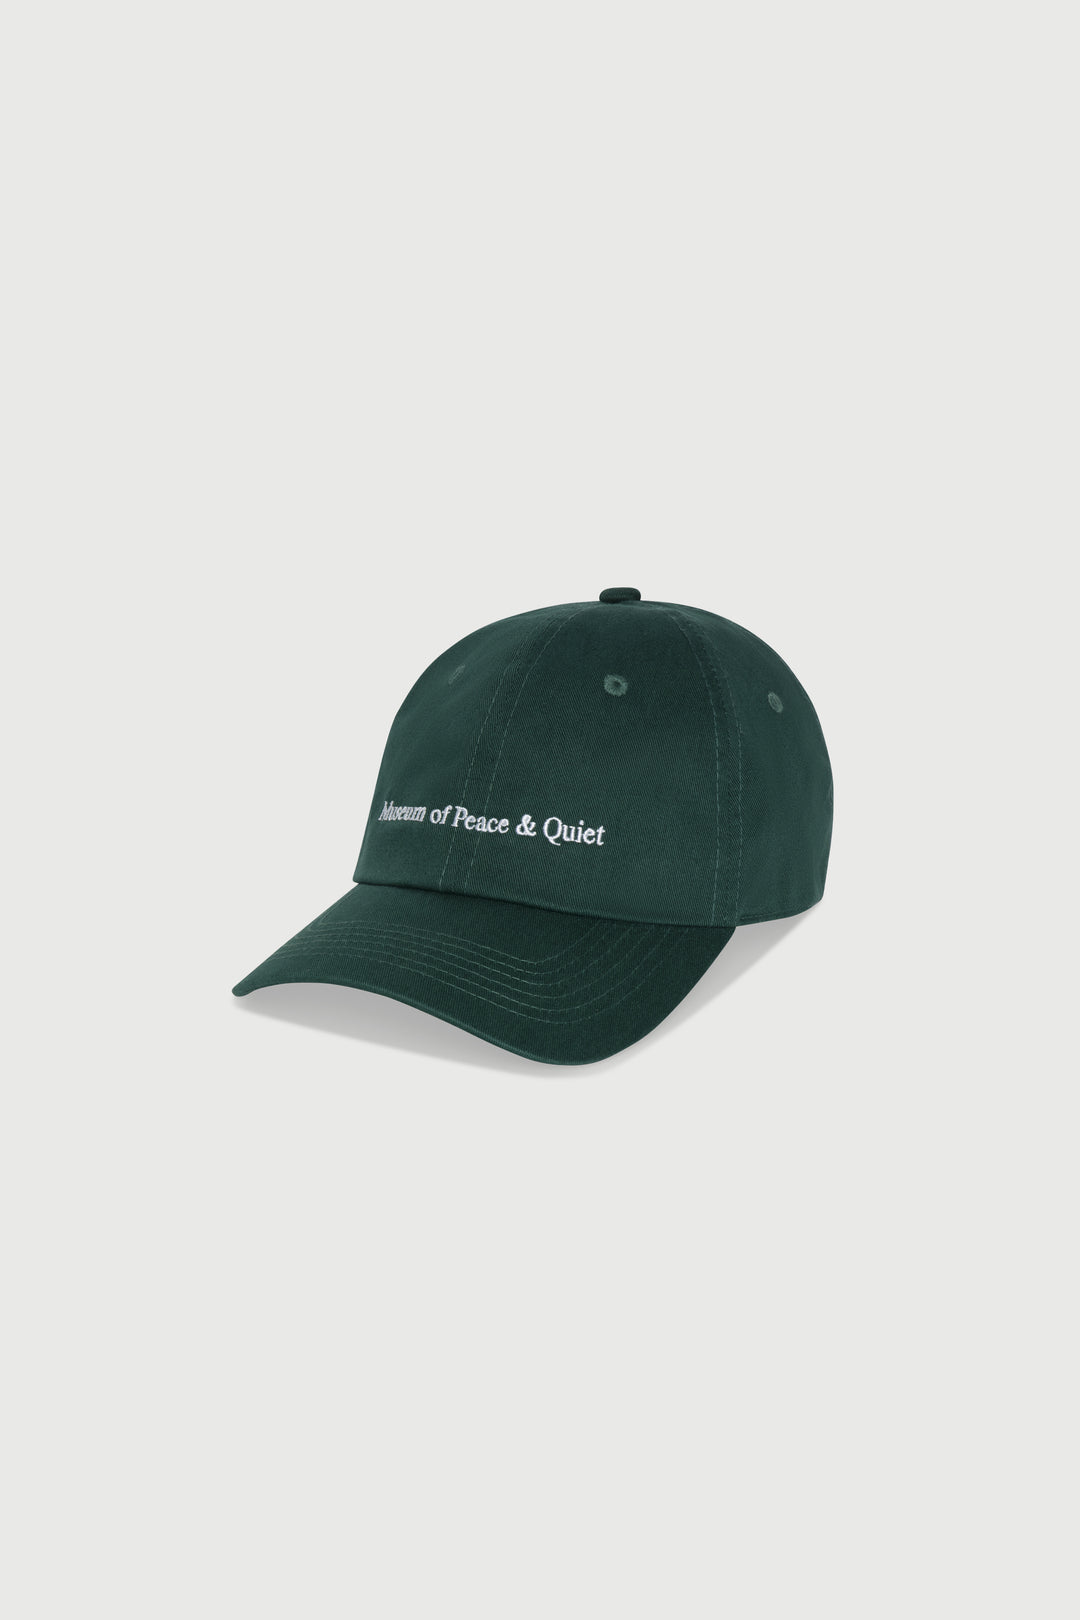 MoPQ Hat - Pine